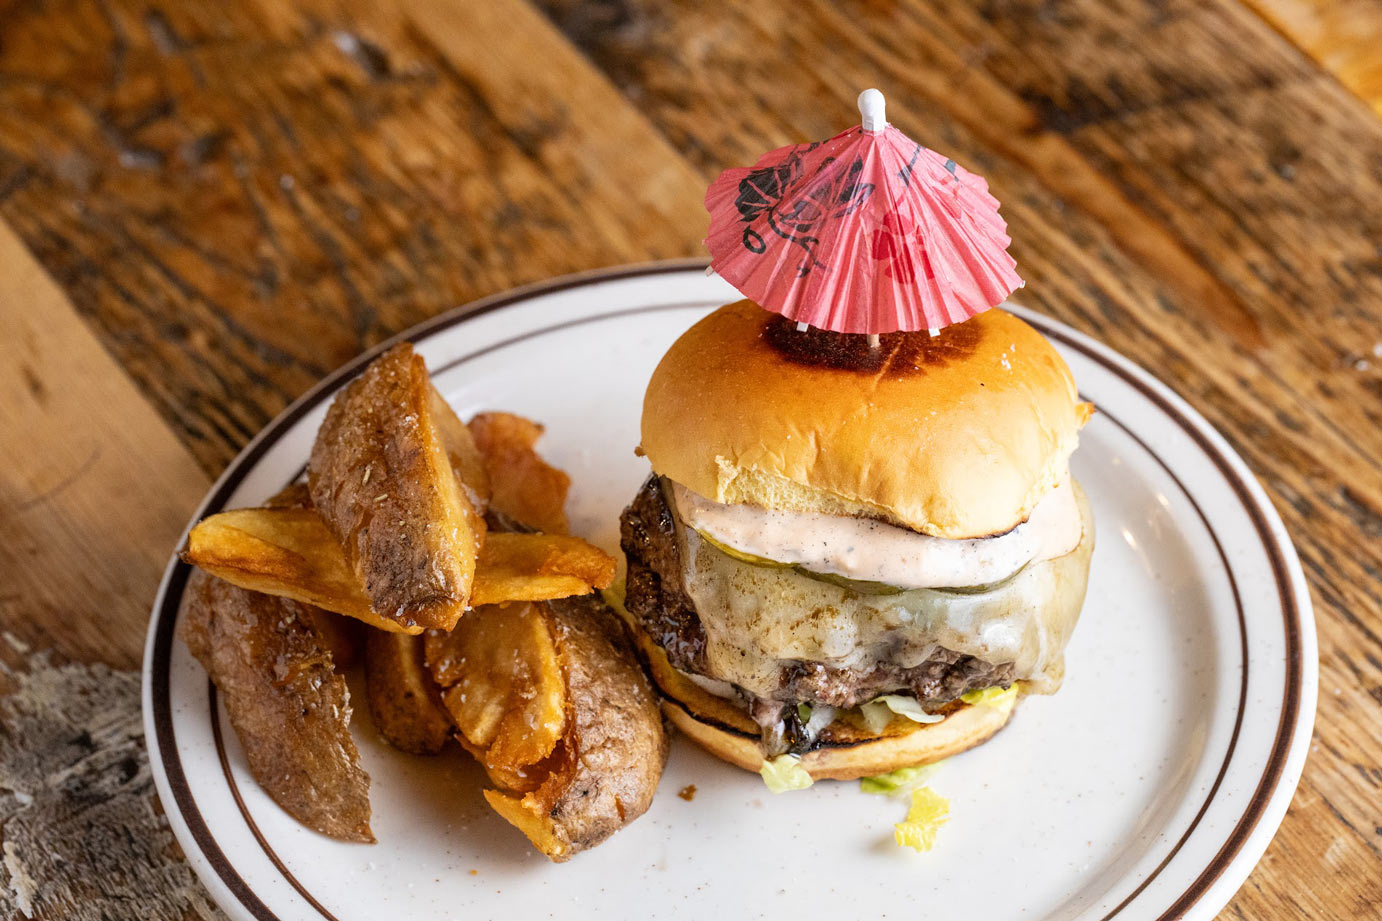 burger and potato on the plate